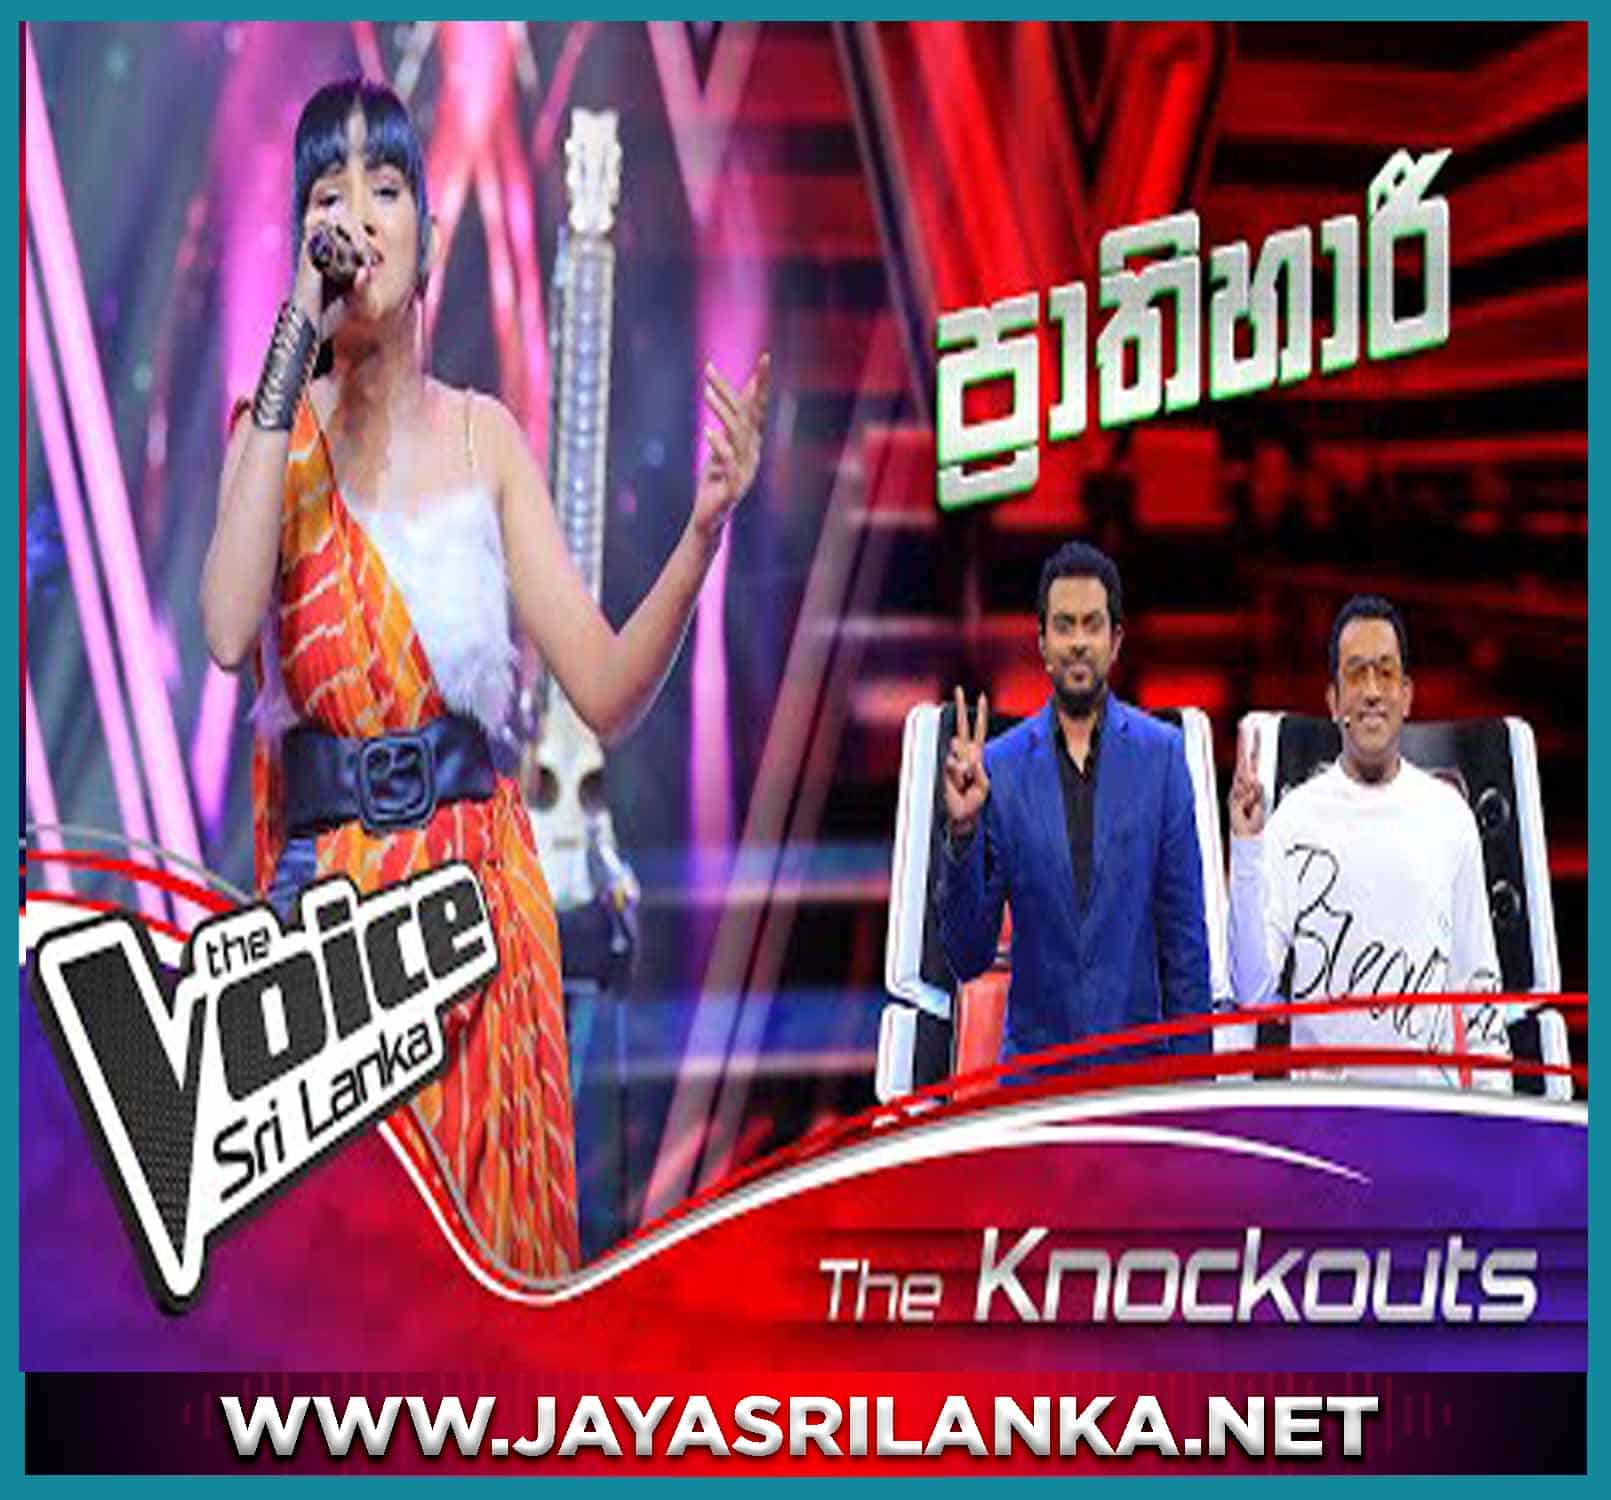 Prathihari (The Voice Sri Lanka)